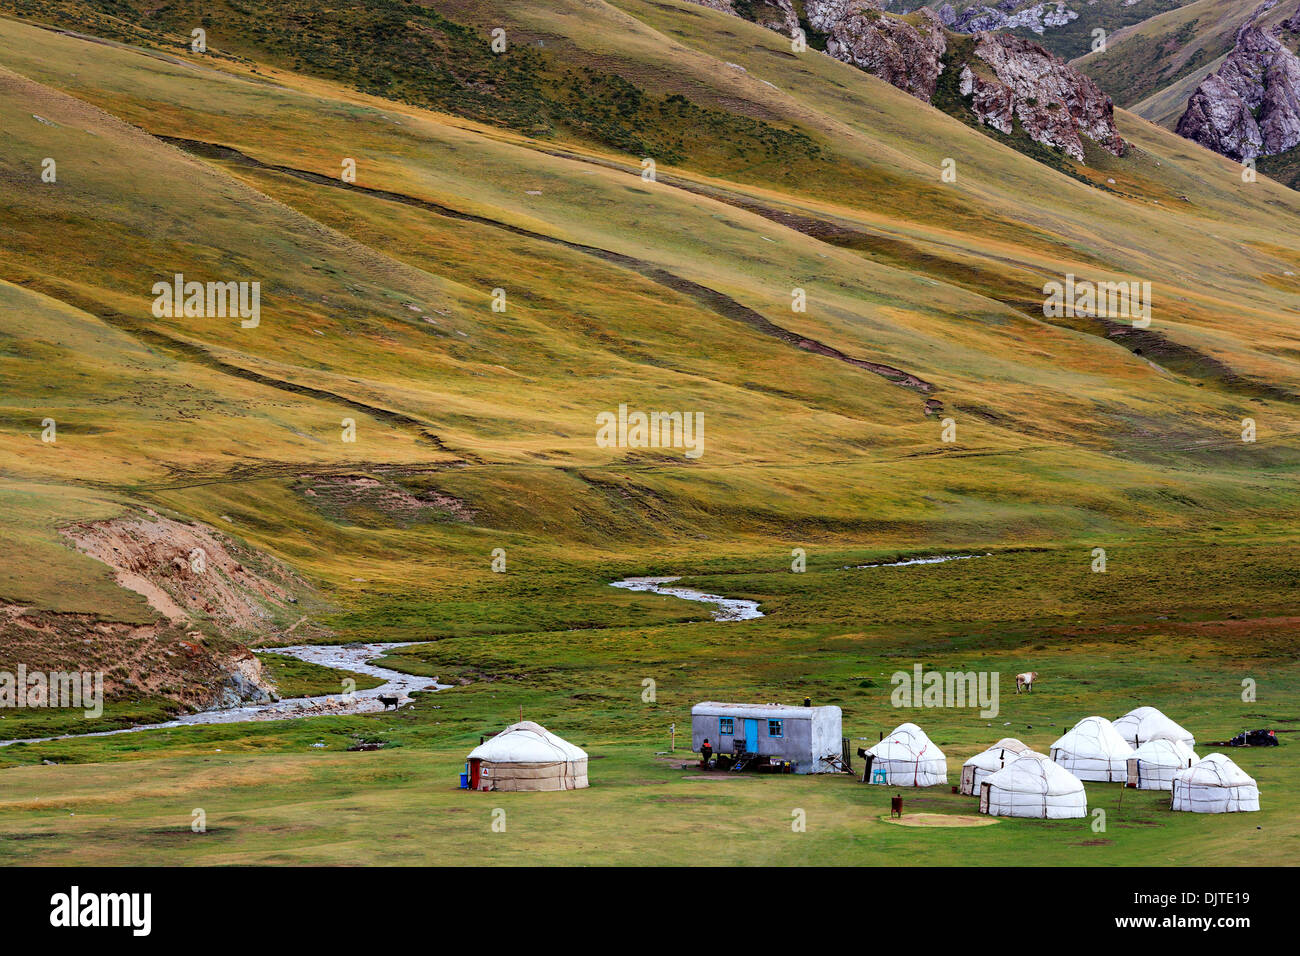 Yurt in Tash Rabat valley, Naryn oblast, Kyrgyzstan Stock Photo